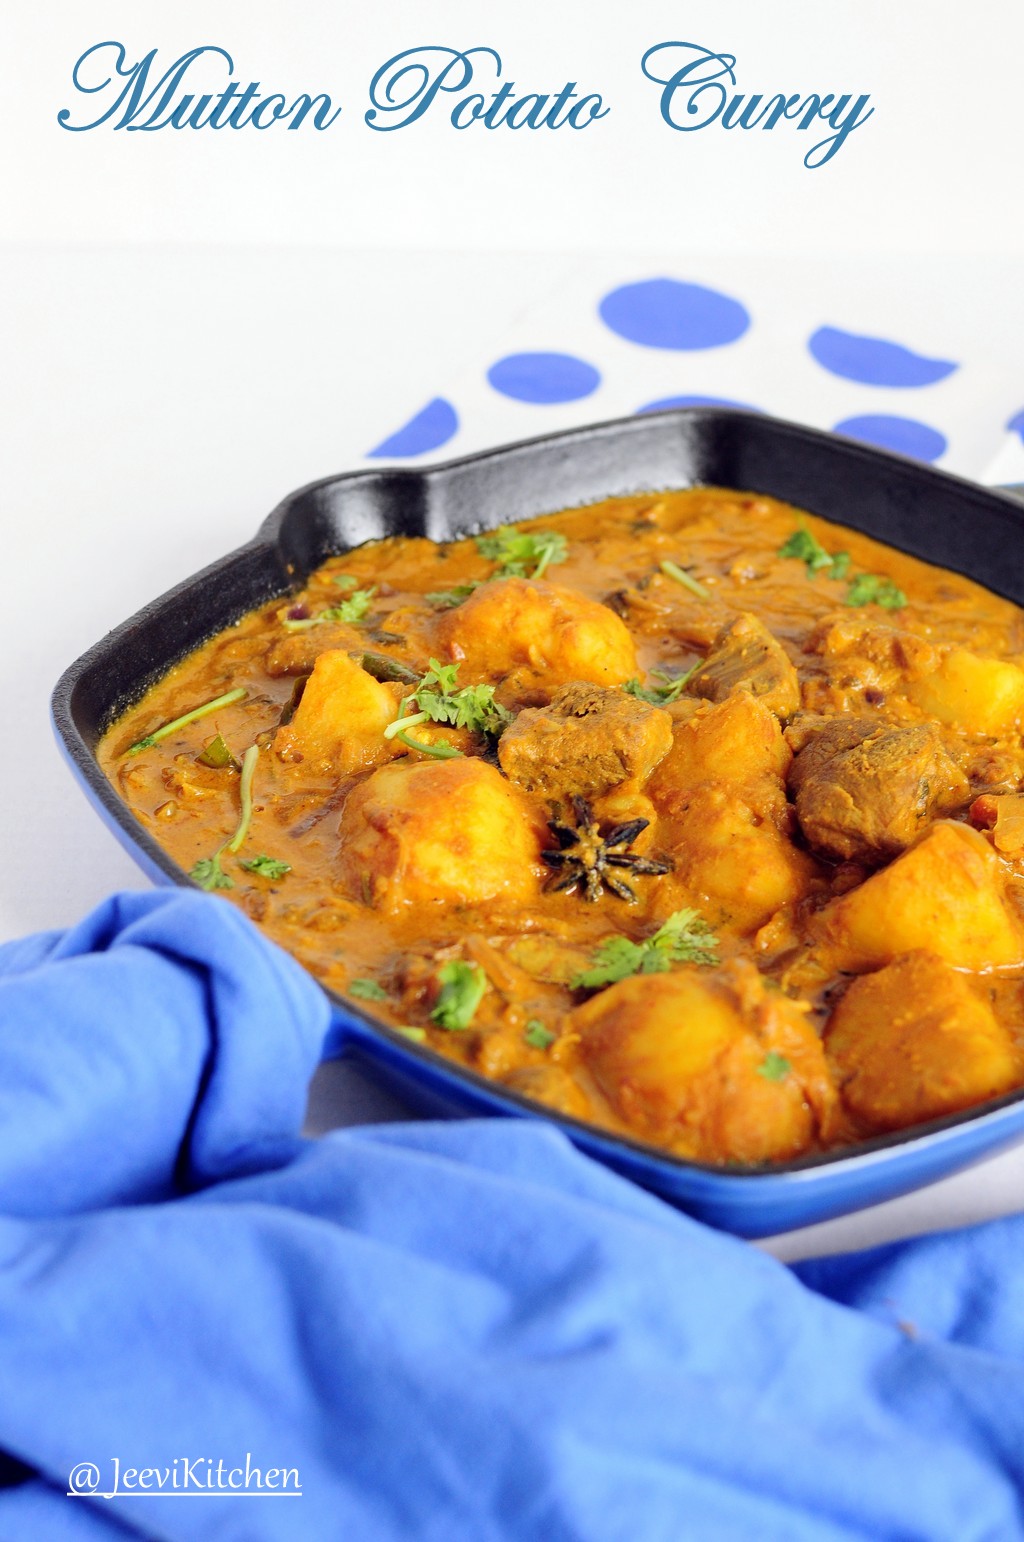 Jeevi Kitchen: Mutton Potato Curry